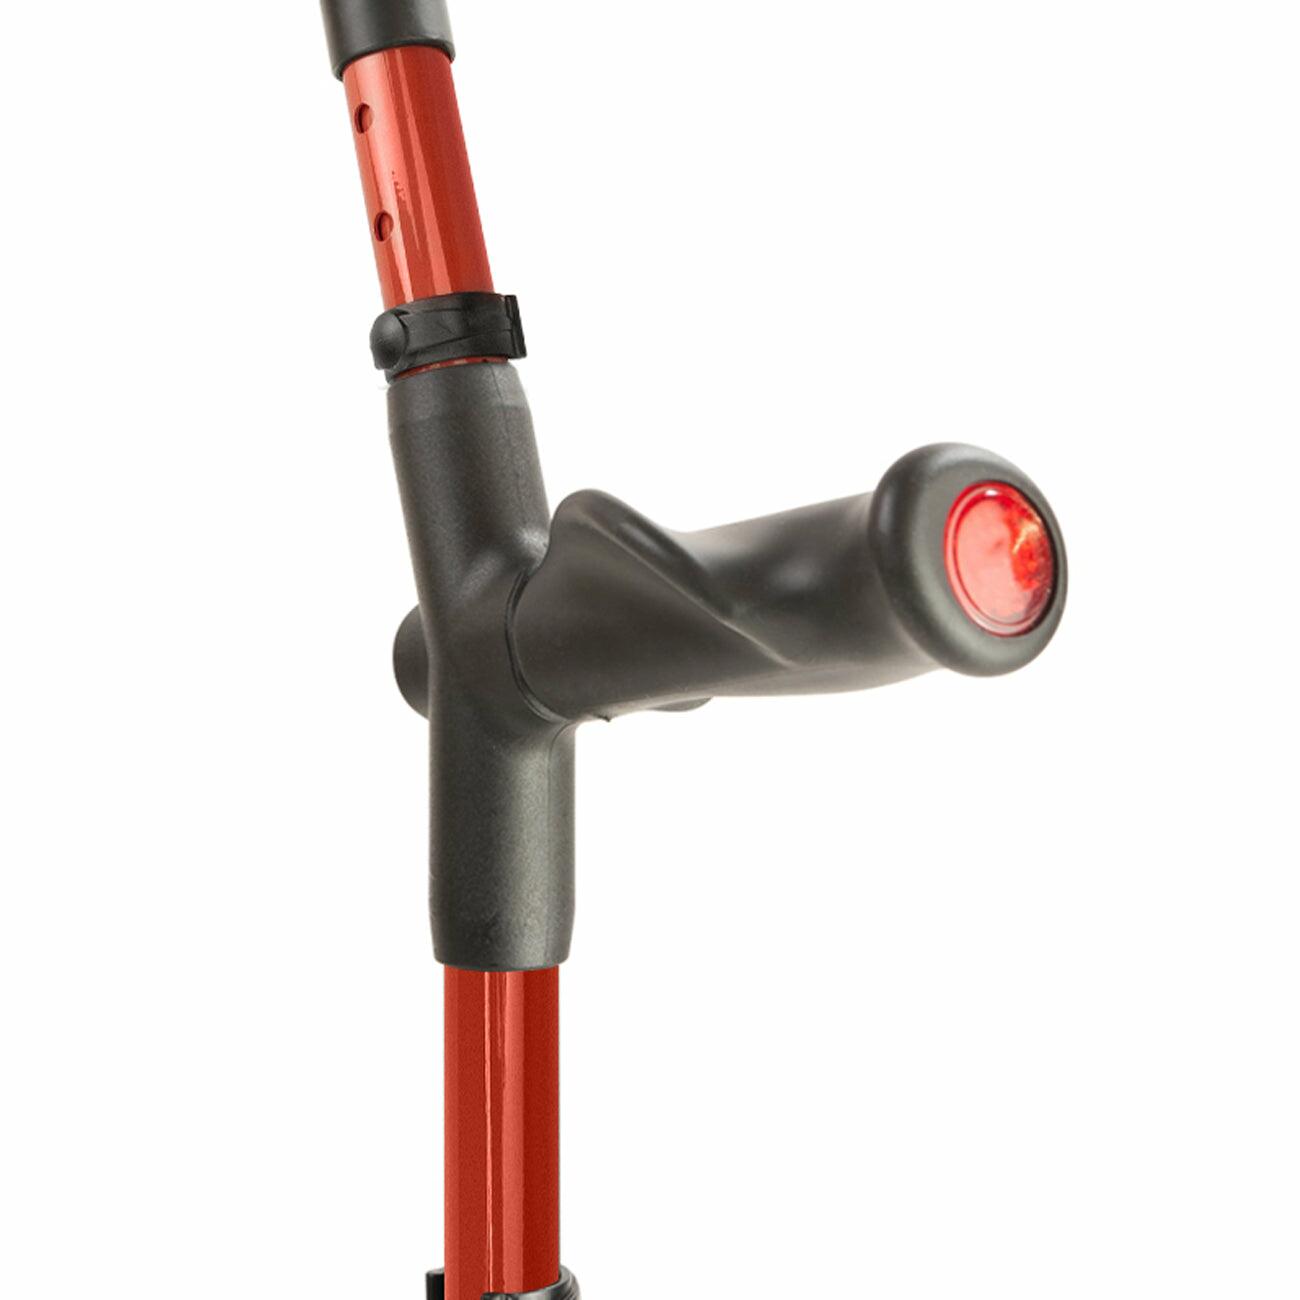 Comfort grip handle of a red Flexyfoot Comfort Grip Double Adjustable Crutch